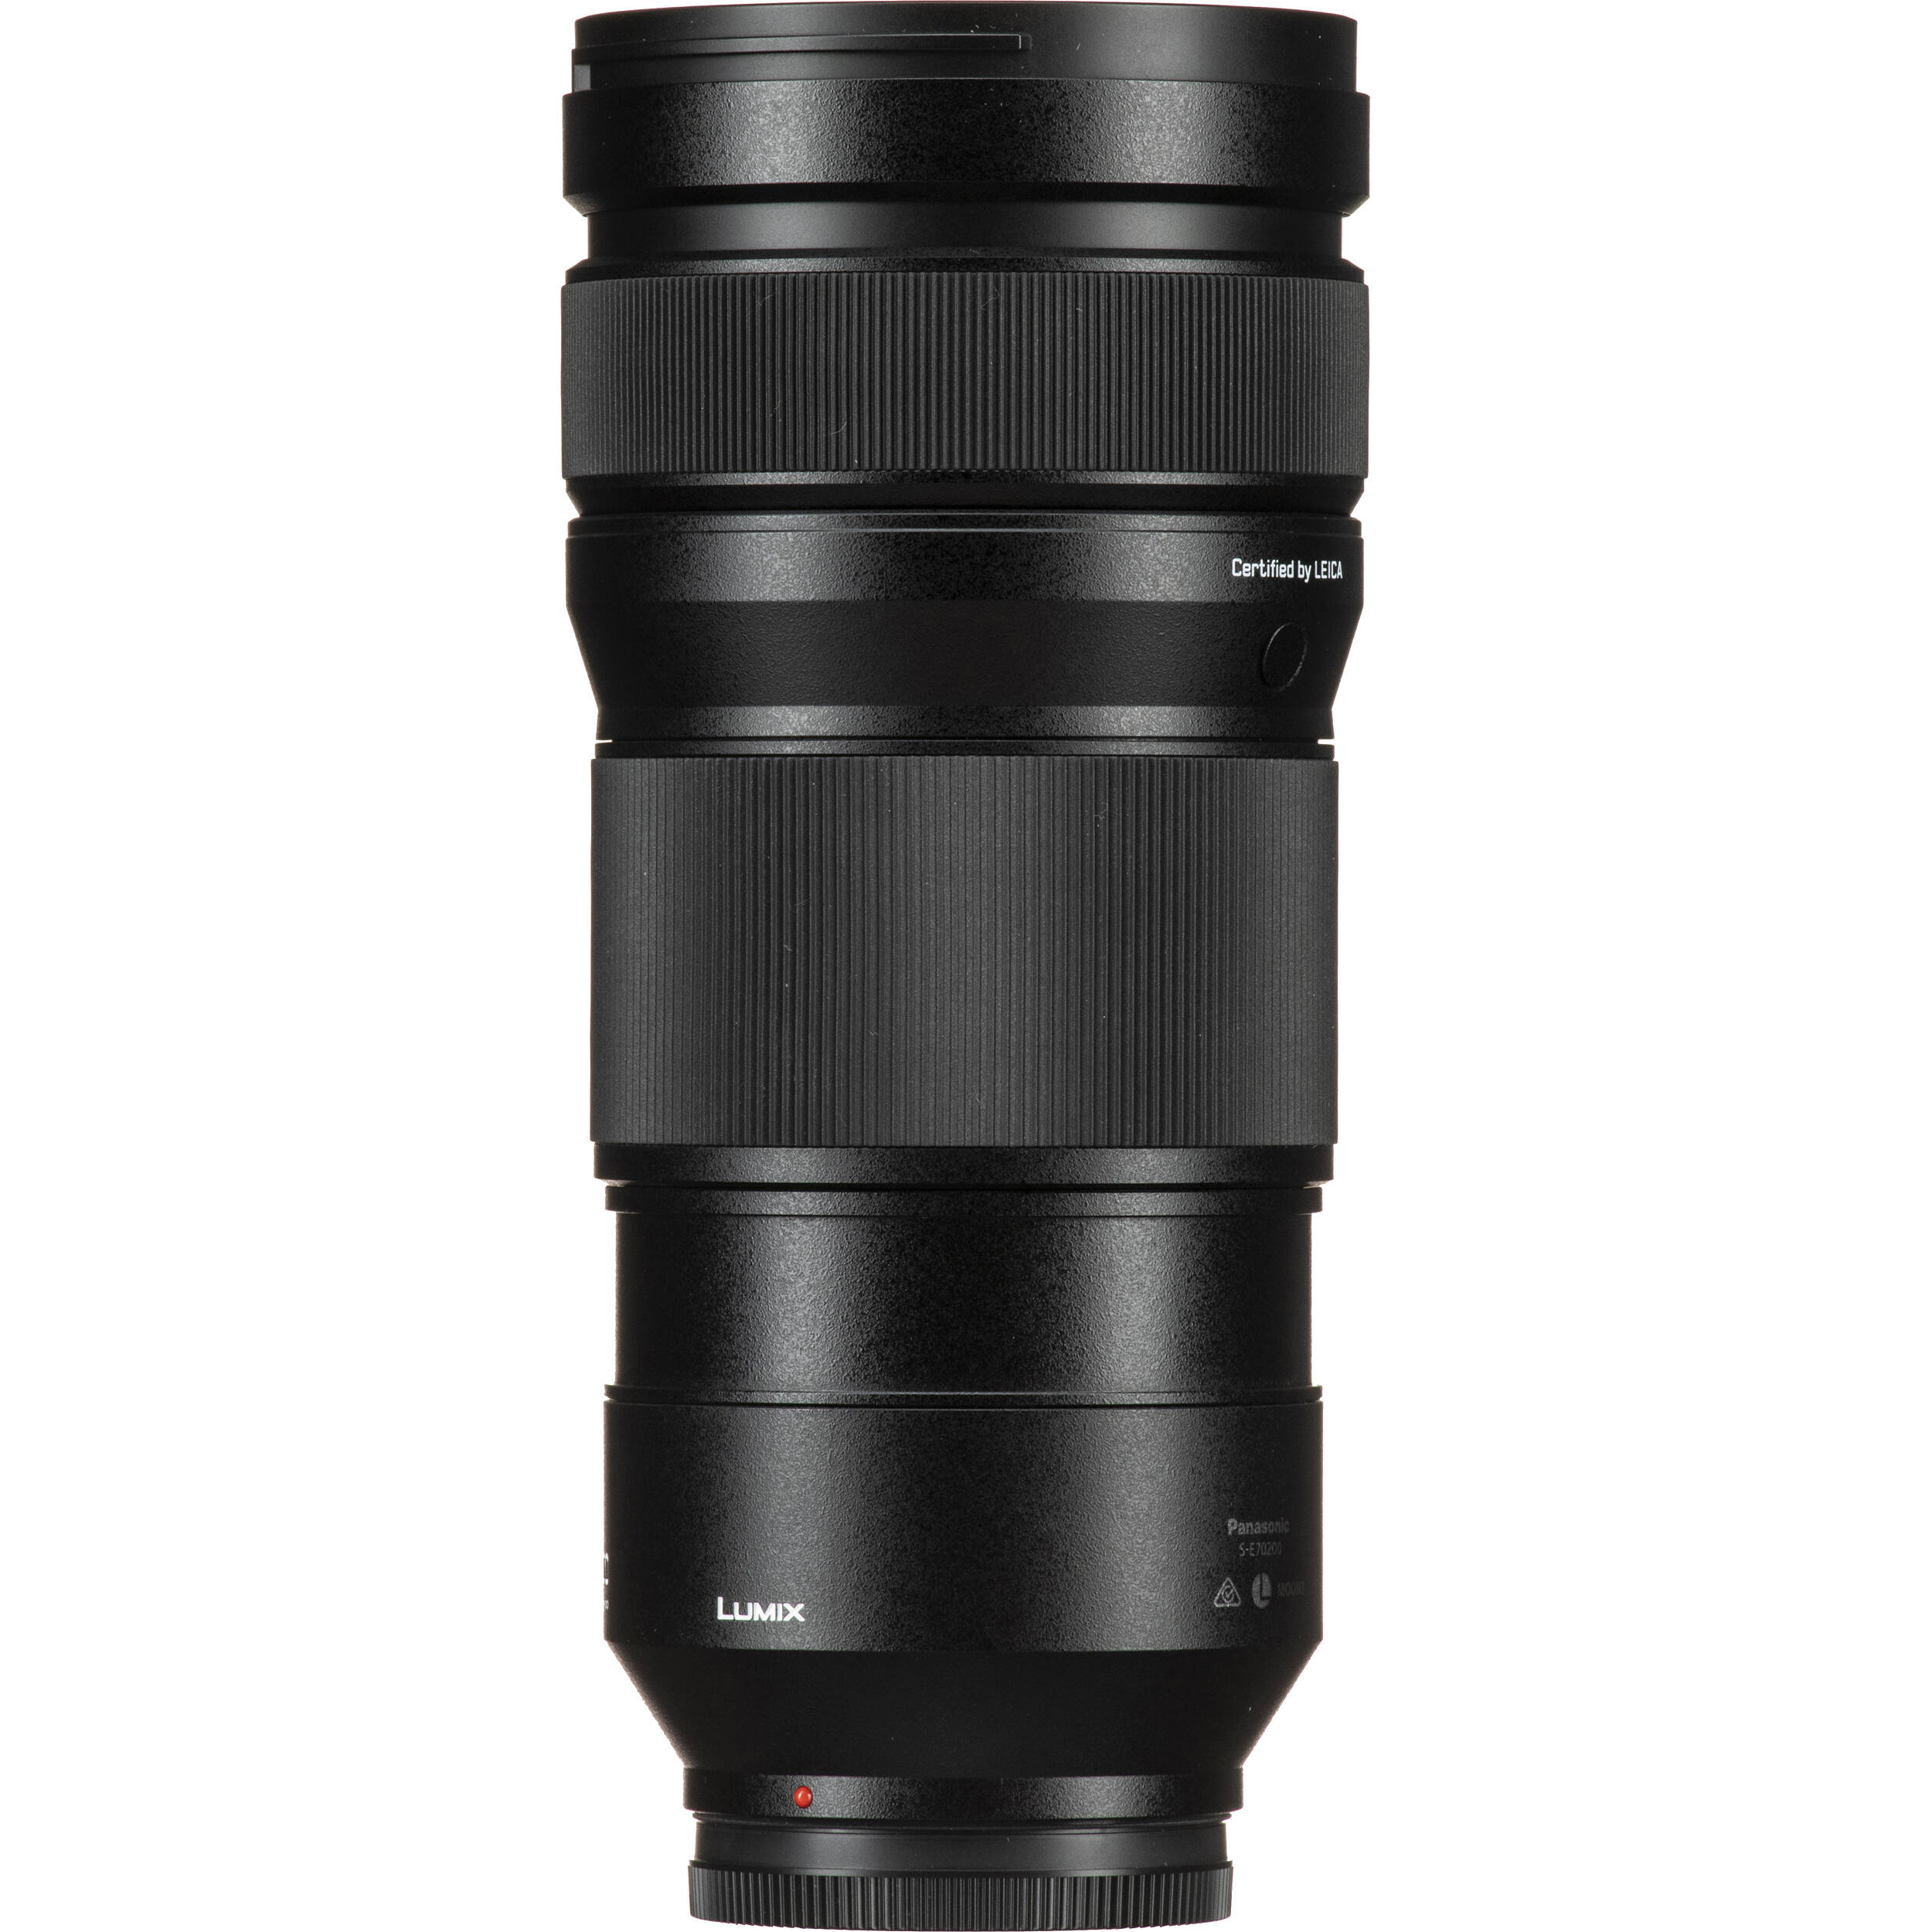 Panasonic Lumix S PRO 70-200mm f/2.8 O.I.S. Lens